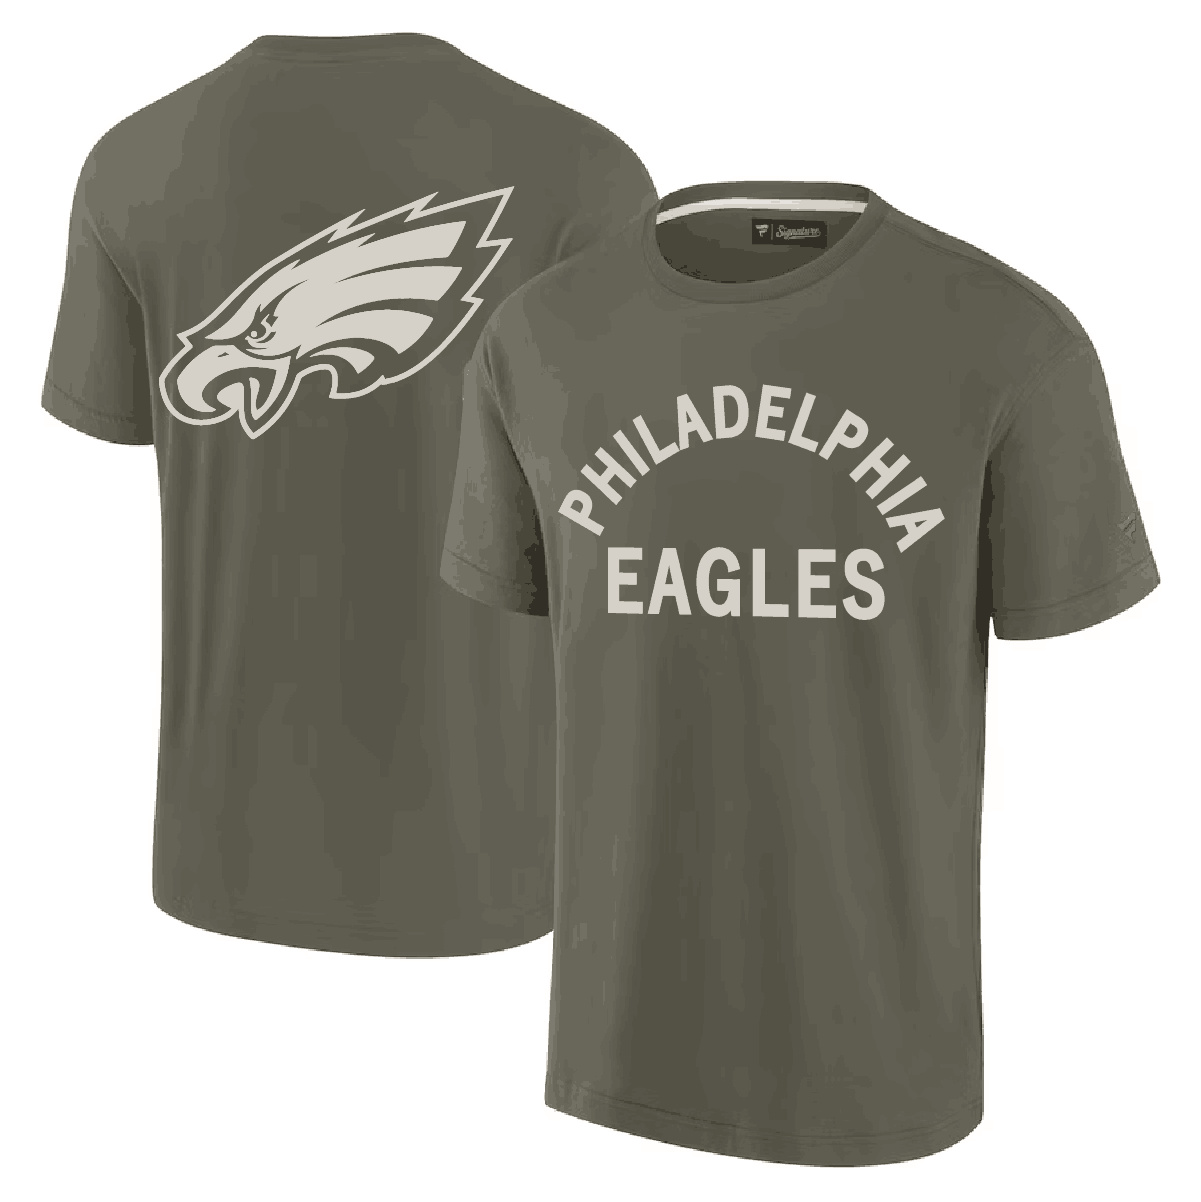 Men's Philadelphia Eagles Olive Elements Super Soft T-Shirt